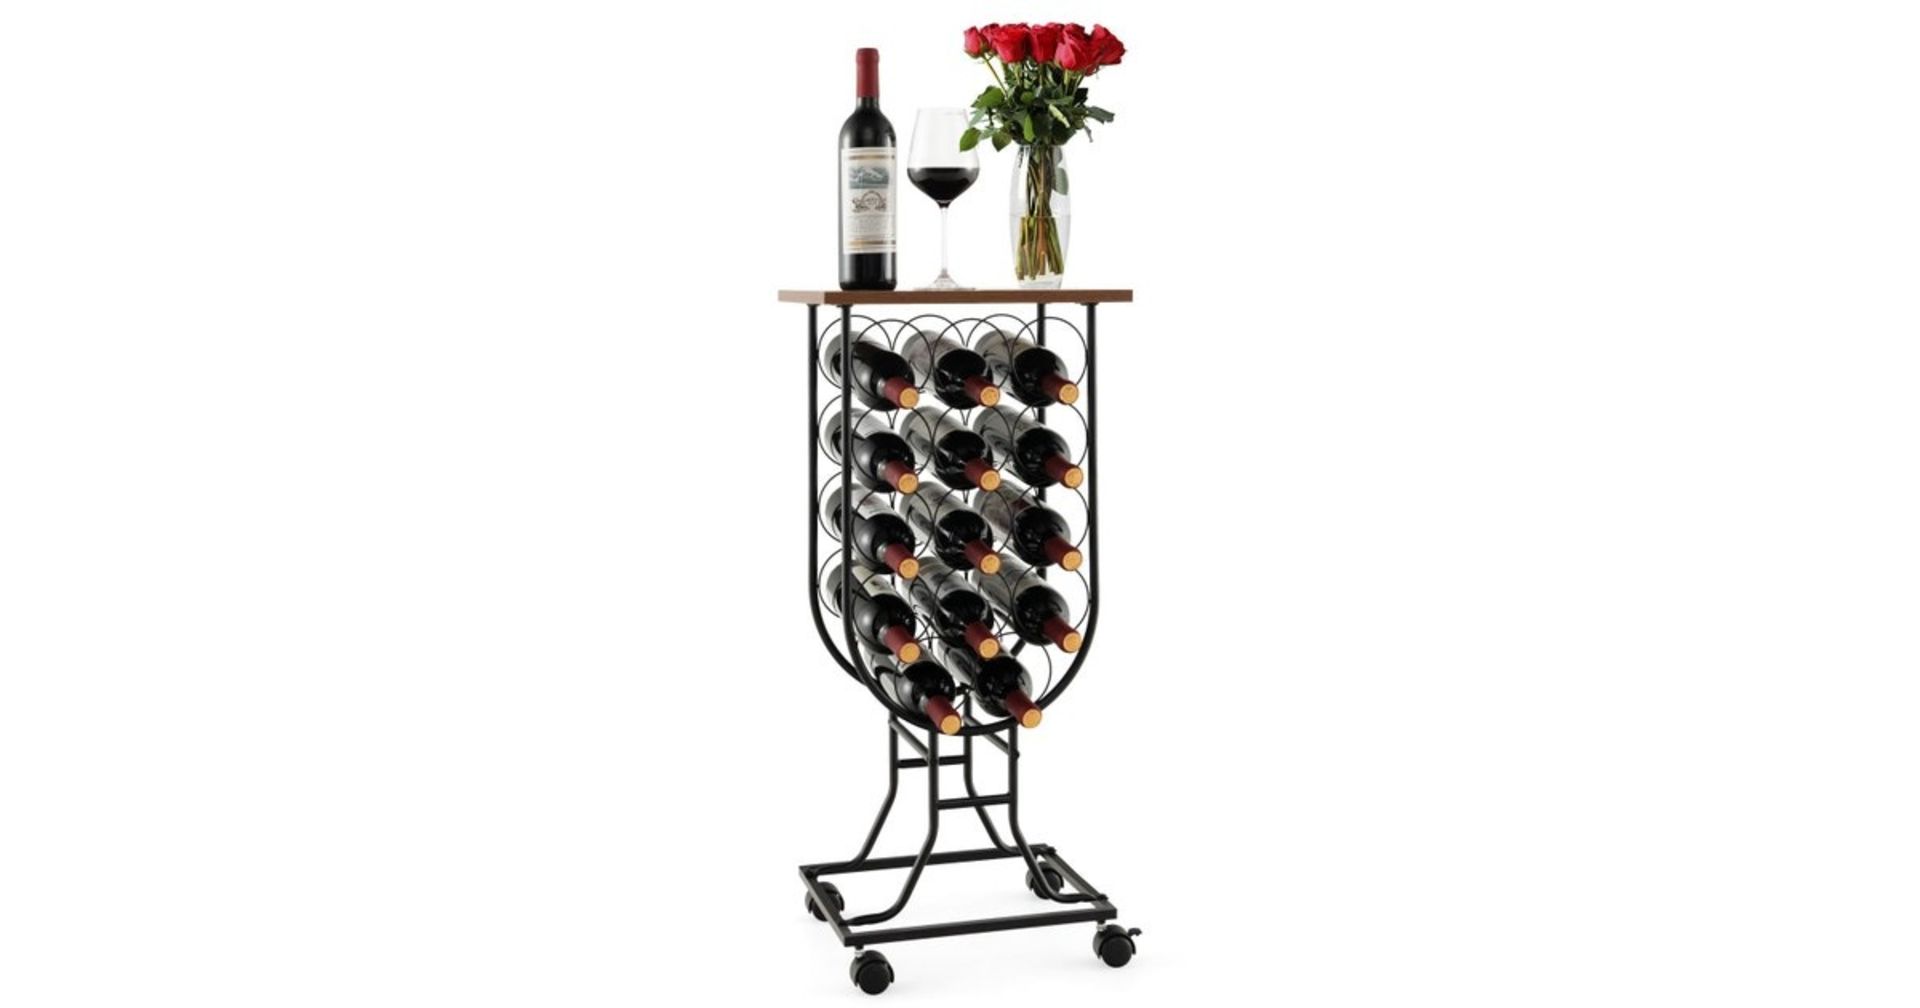 14 Bottles Mobile Wine Rack Industrial Cellar Display Storage Bar Cart Wood Tabletop - ER54